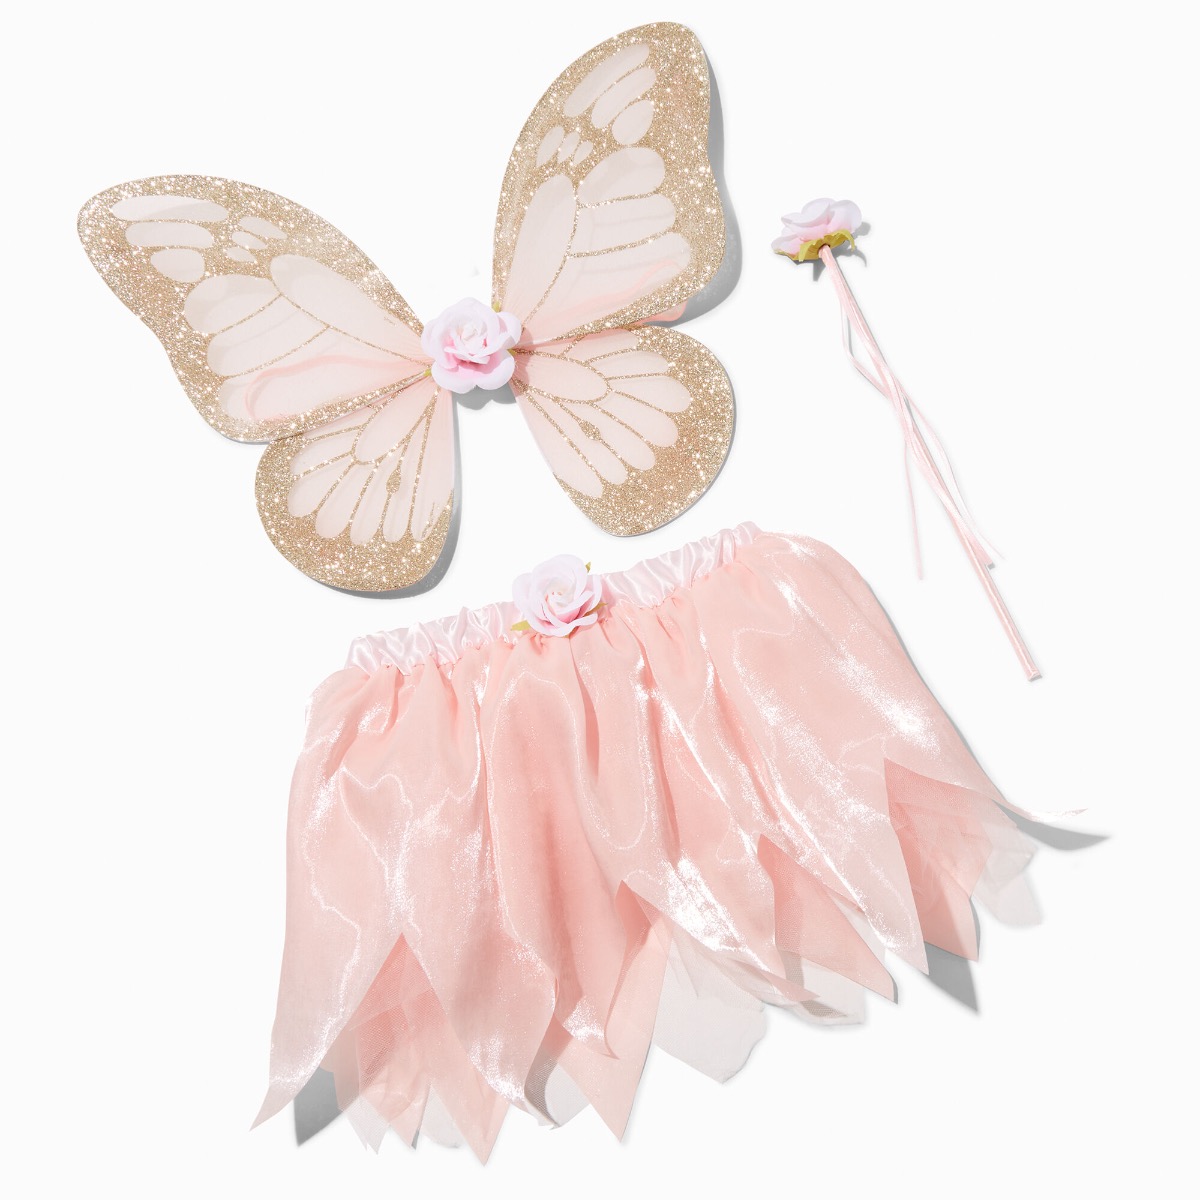 claires - μεταμφιέσεις για τις Απόκριες - Claires Club - Butterfly Dress Up Σετ (3 τεμάχια)